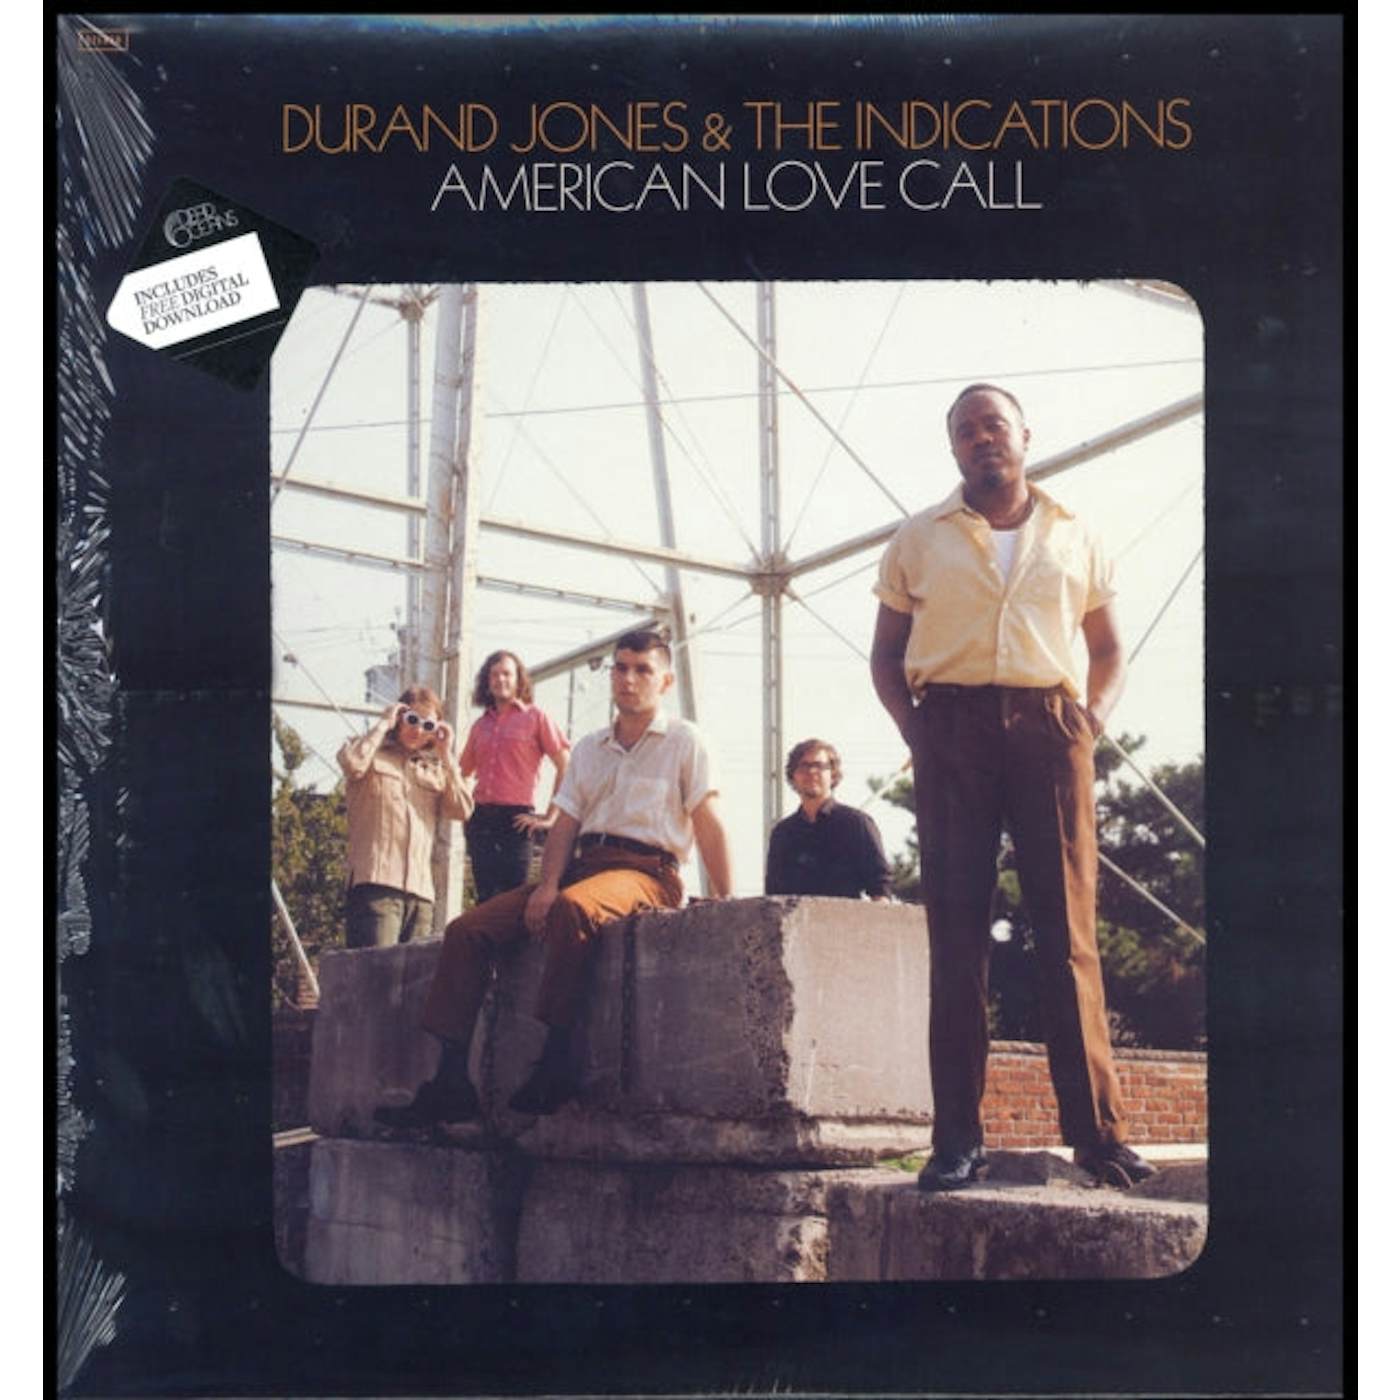 Durand Jones & The Indications LP Vinyl Record - American Love Call